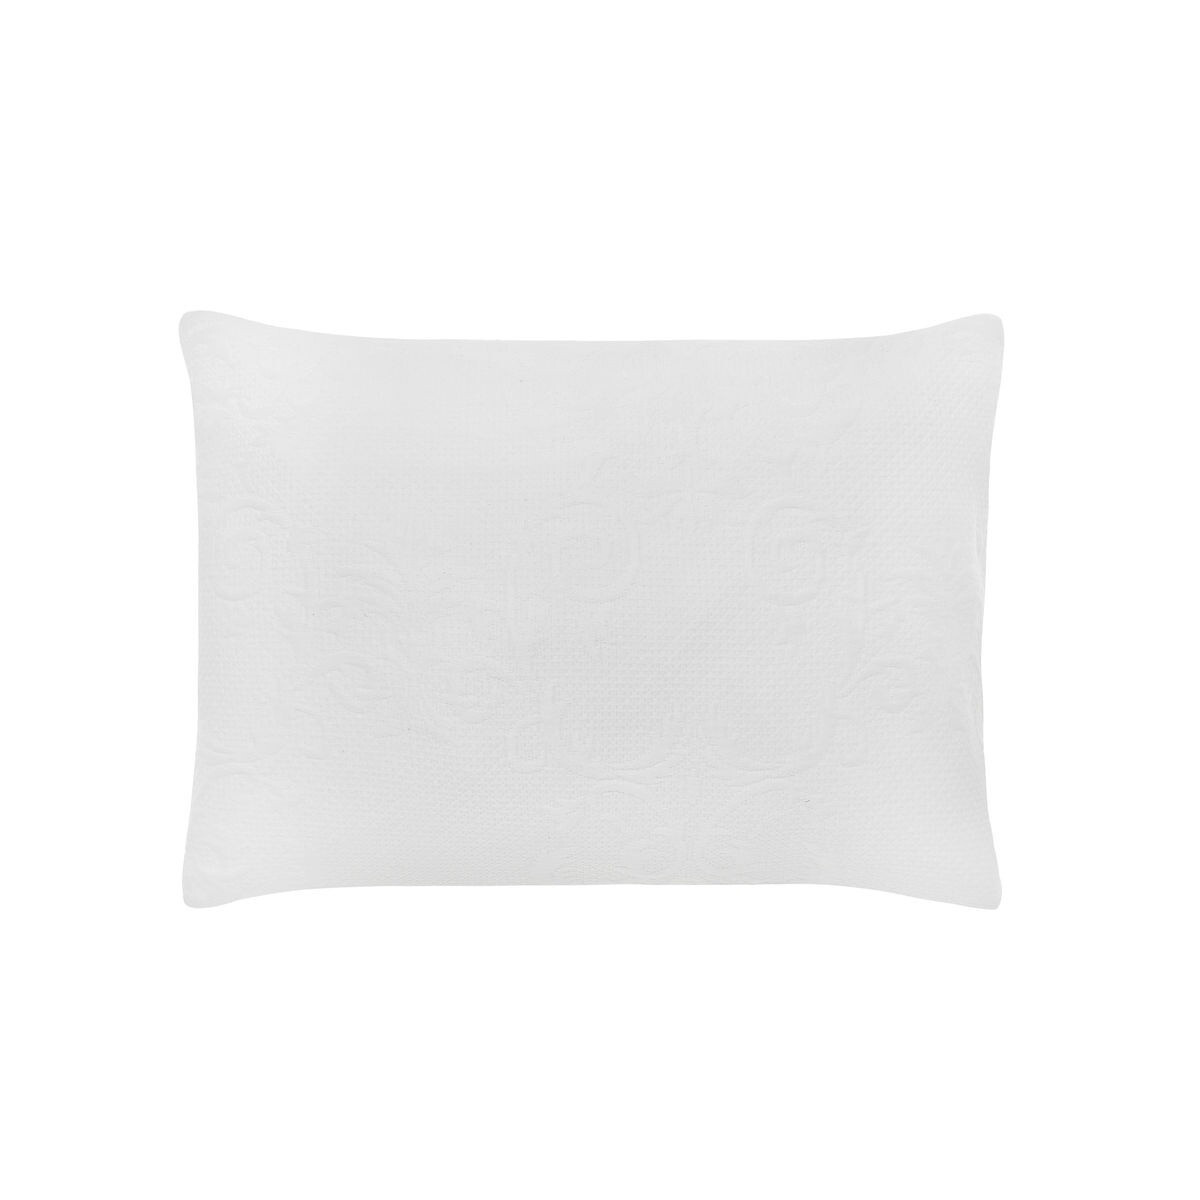 Portofino solid colour rectangular cushion with jacquard design, White, large image number 0